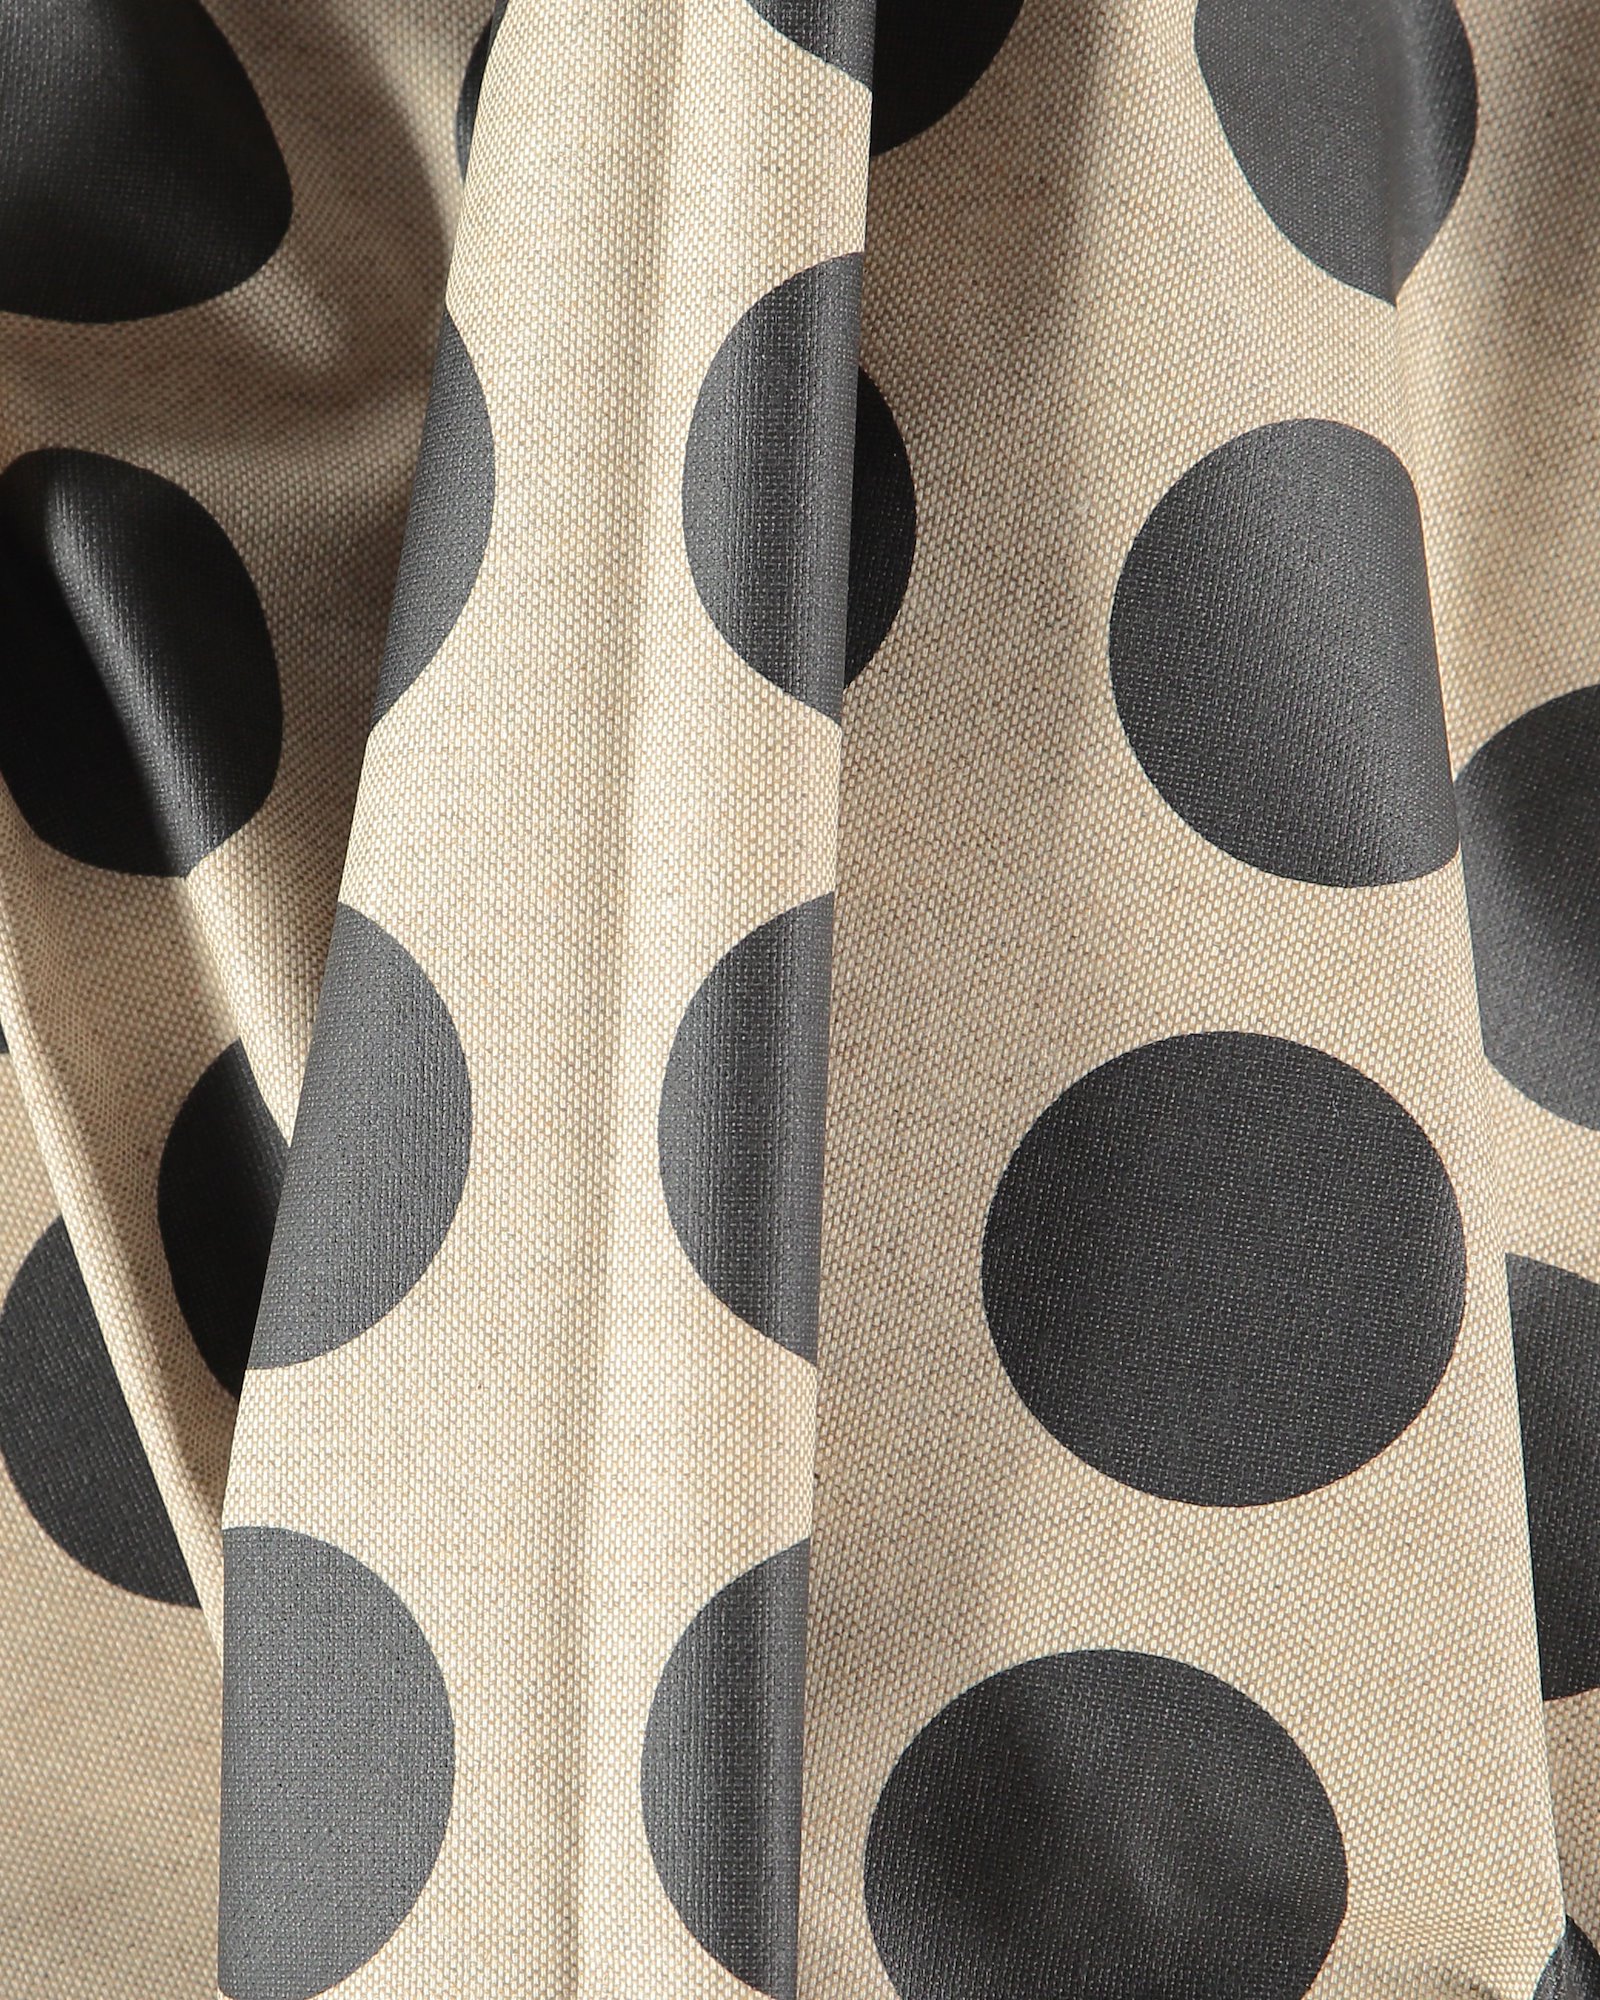 Woven oilcloth linenlook w black dots 870368_pack